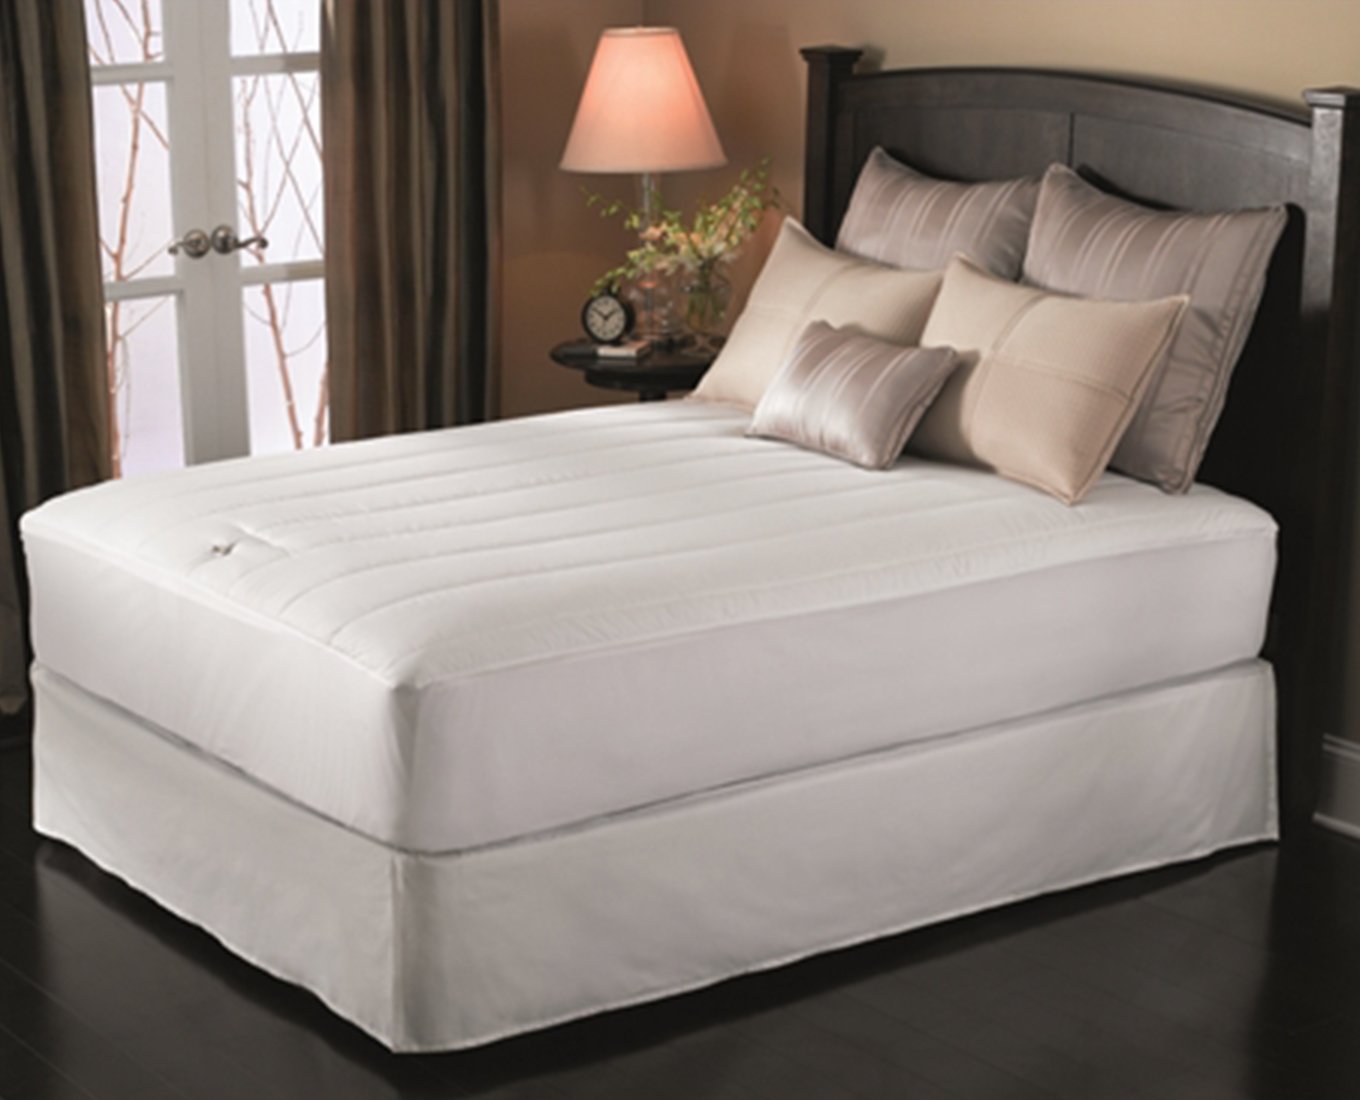 heated mattress pad vs electric blanket reddit